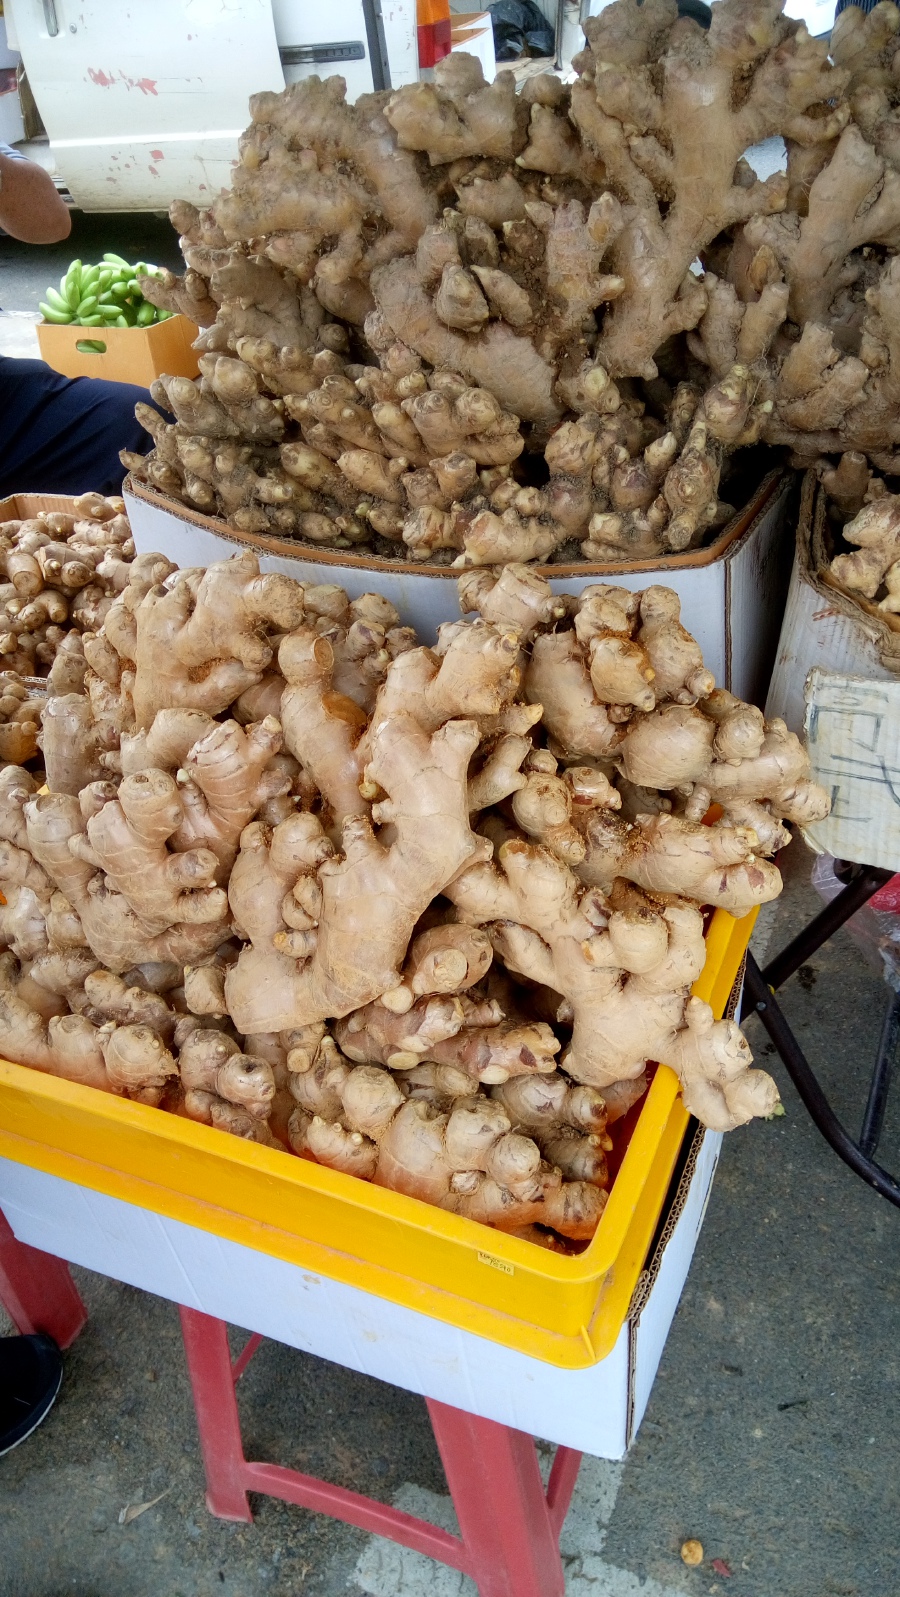 You can get fresh Bukit Tinggi ginger at the wet market.